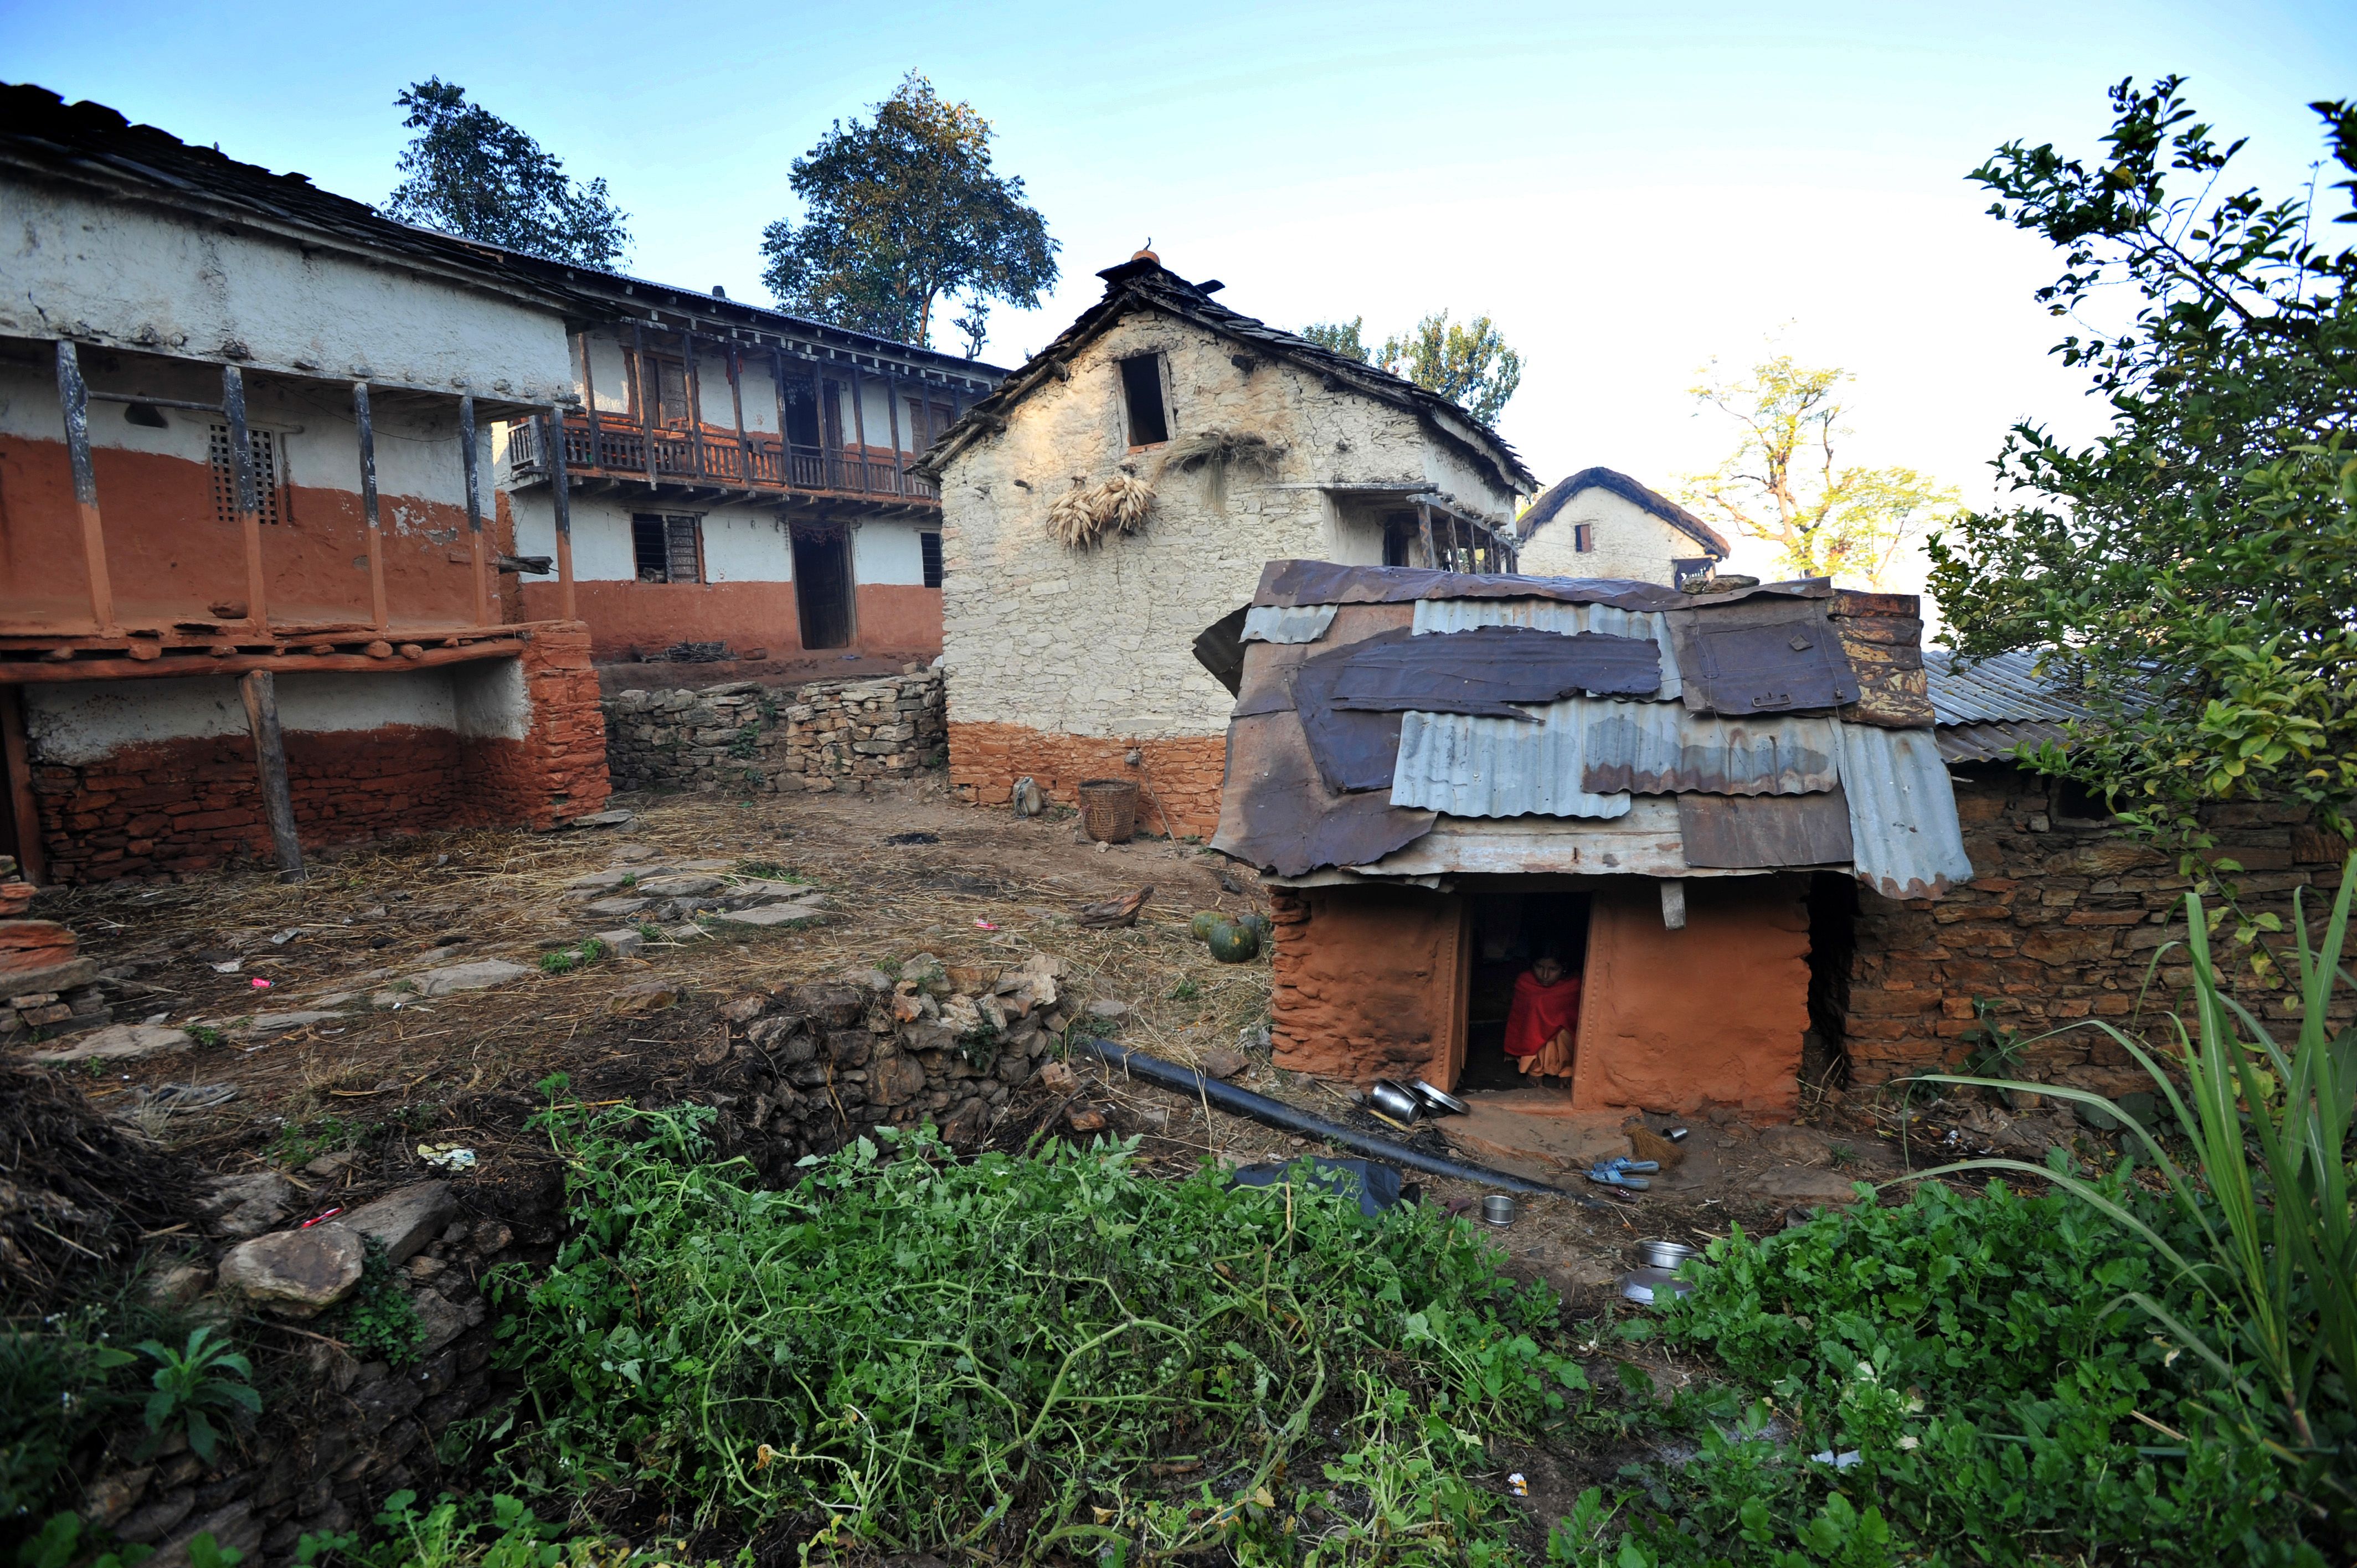 Nepali Sleeping Sex - Nepal girls sleep in 'menstruation huts' despite ban, study finds | CNN